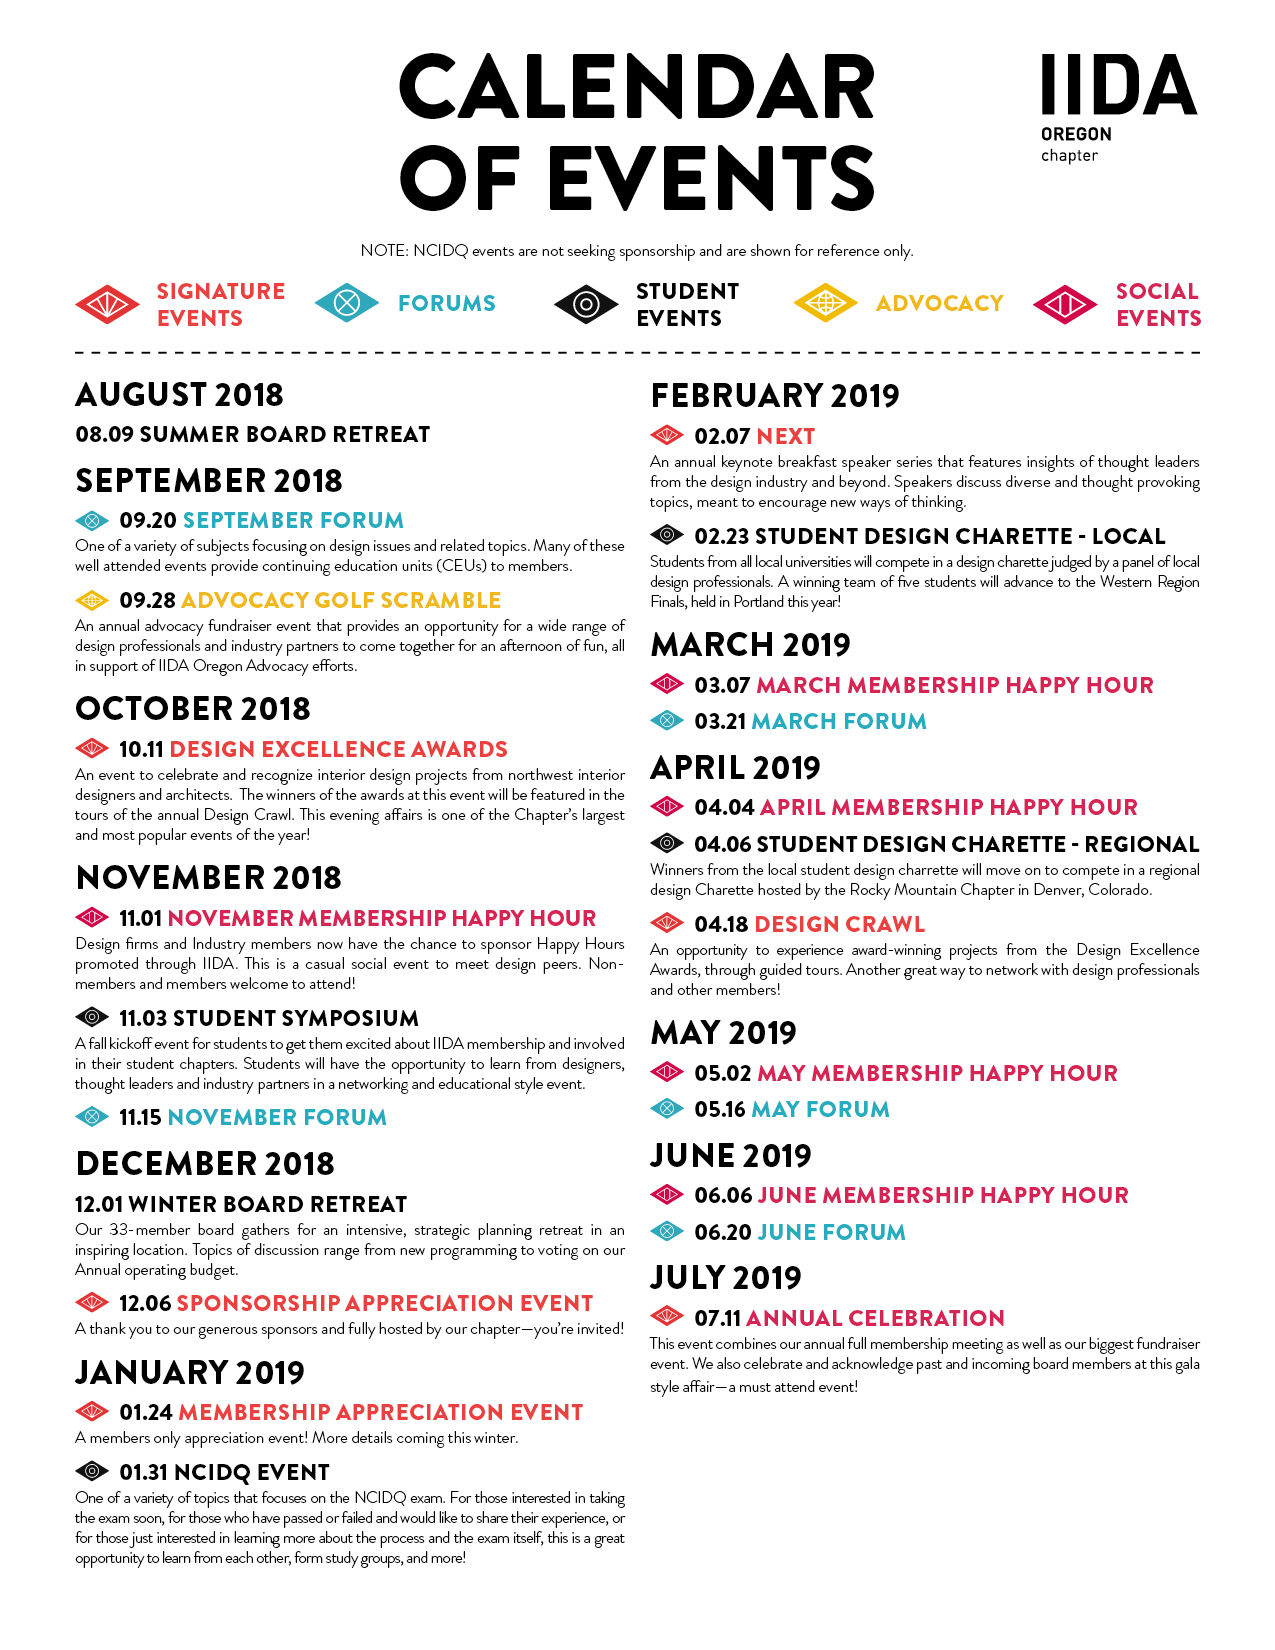 Calendar of Events IIDA Oregon Chapter